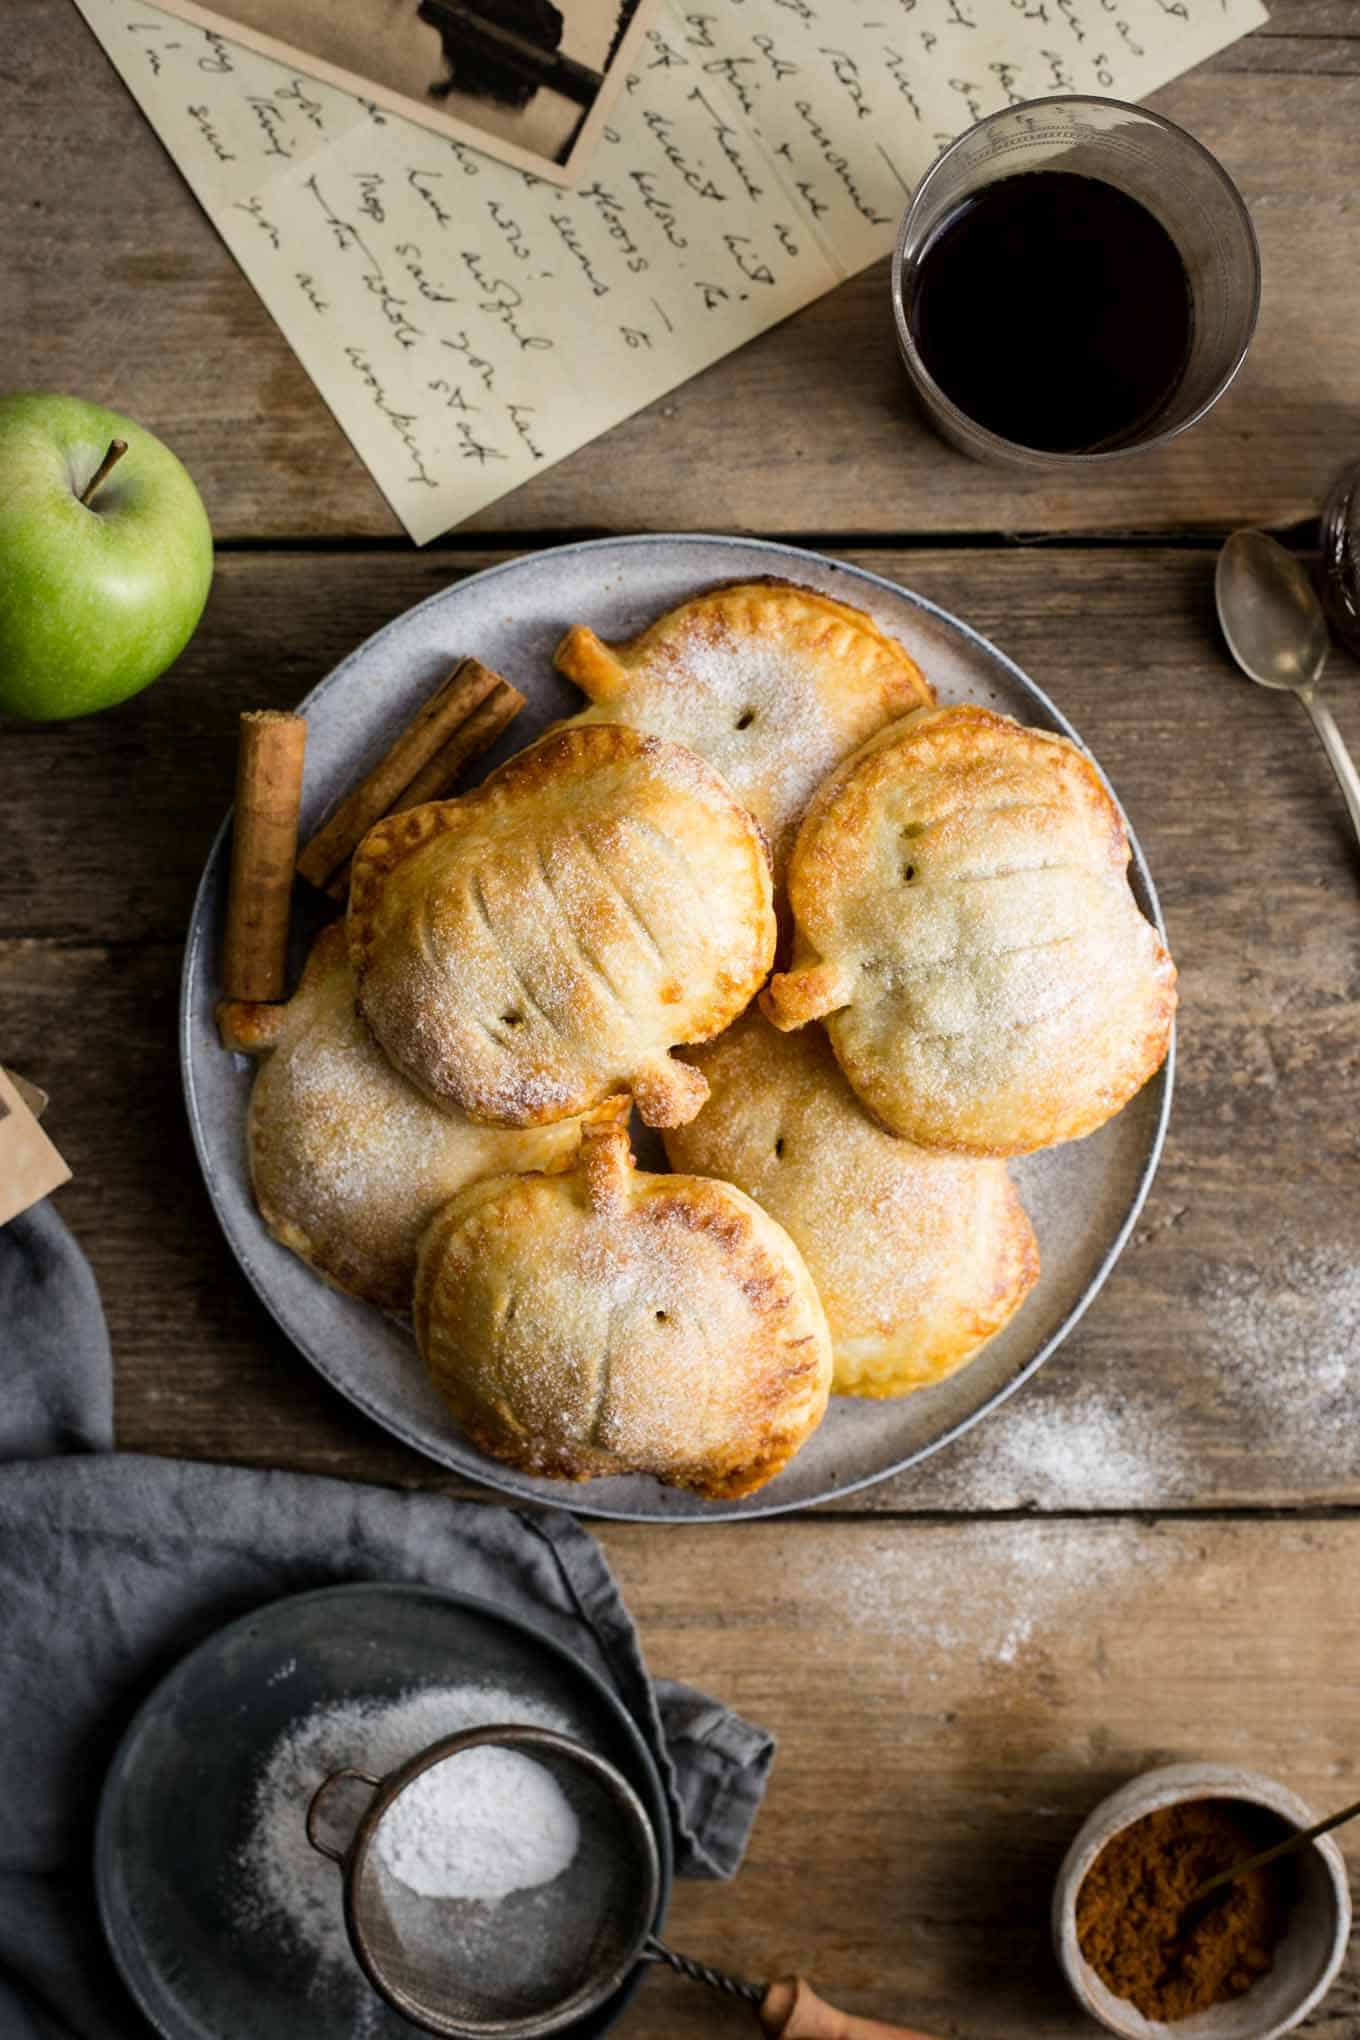 Spiced apple and pumpkin mini pies #vegan #pie | via @annabanana.co